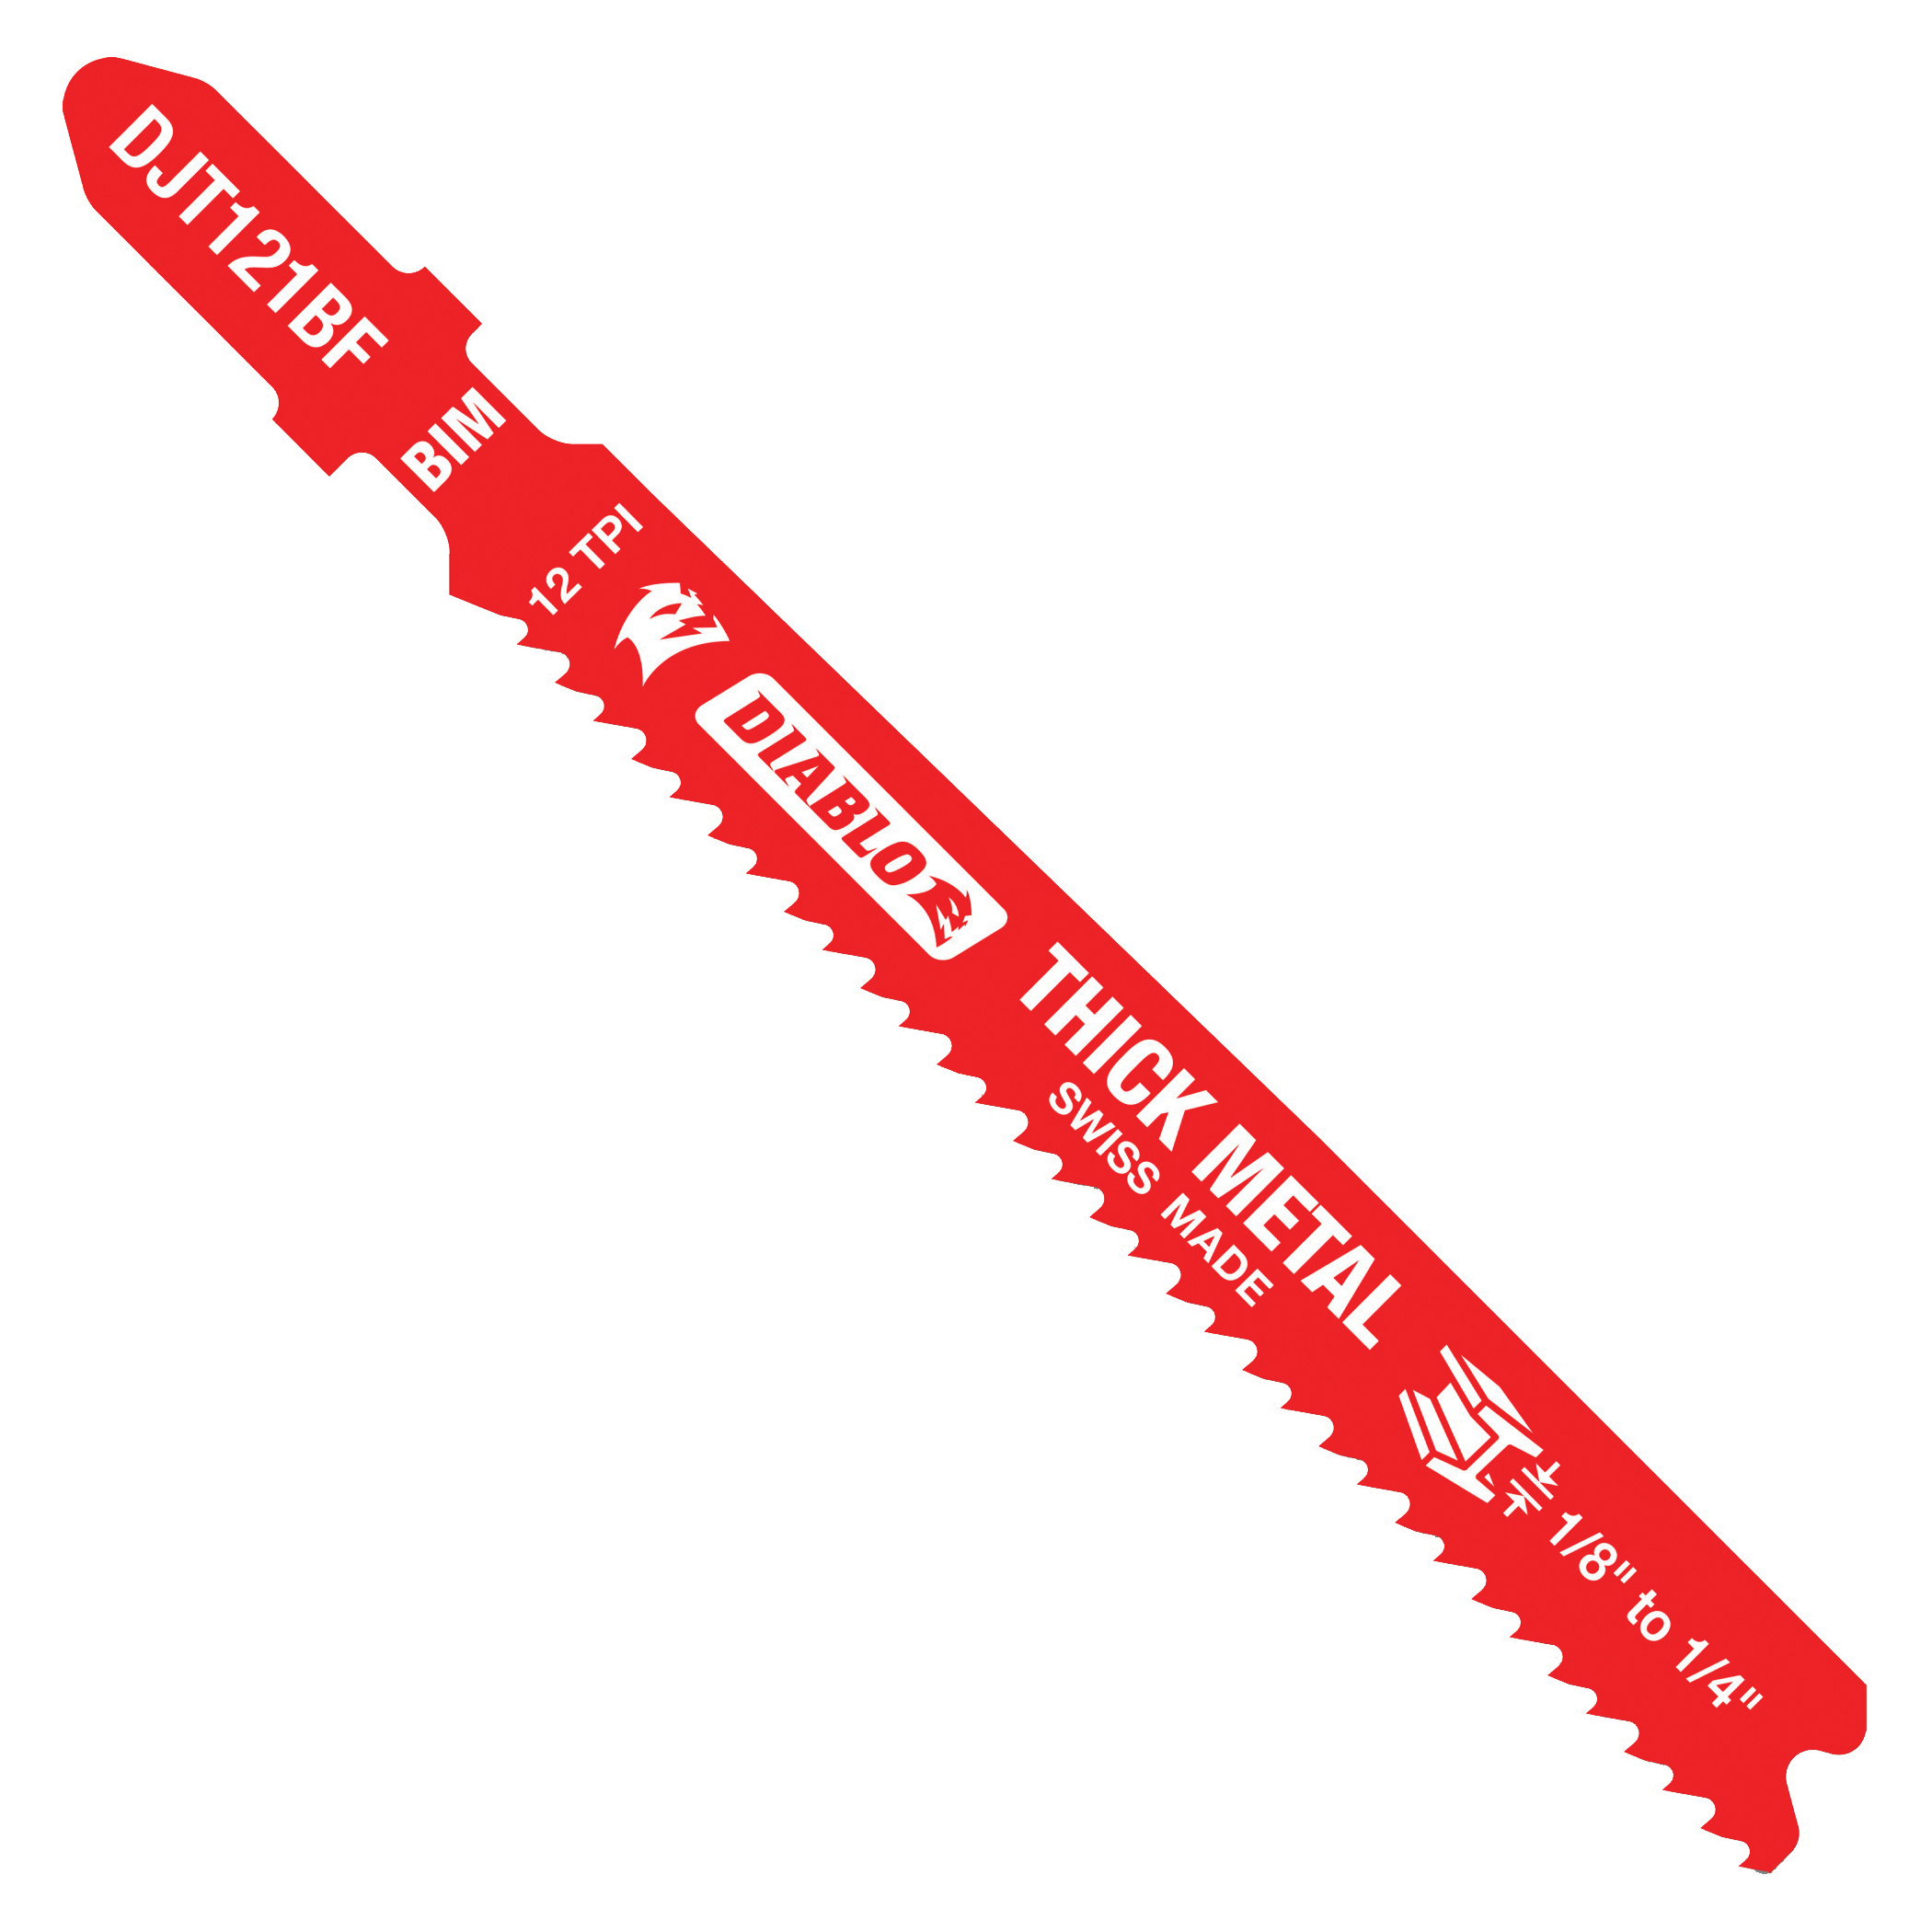 DJT121BF5 Jig Saw Blade, 3-5/8 in L, 12 TPI, Bi-Metal Cutting Edge